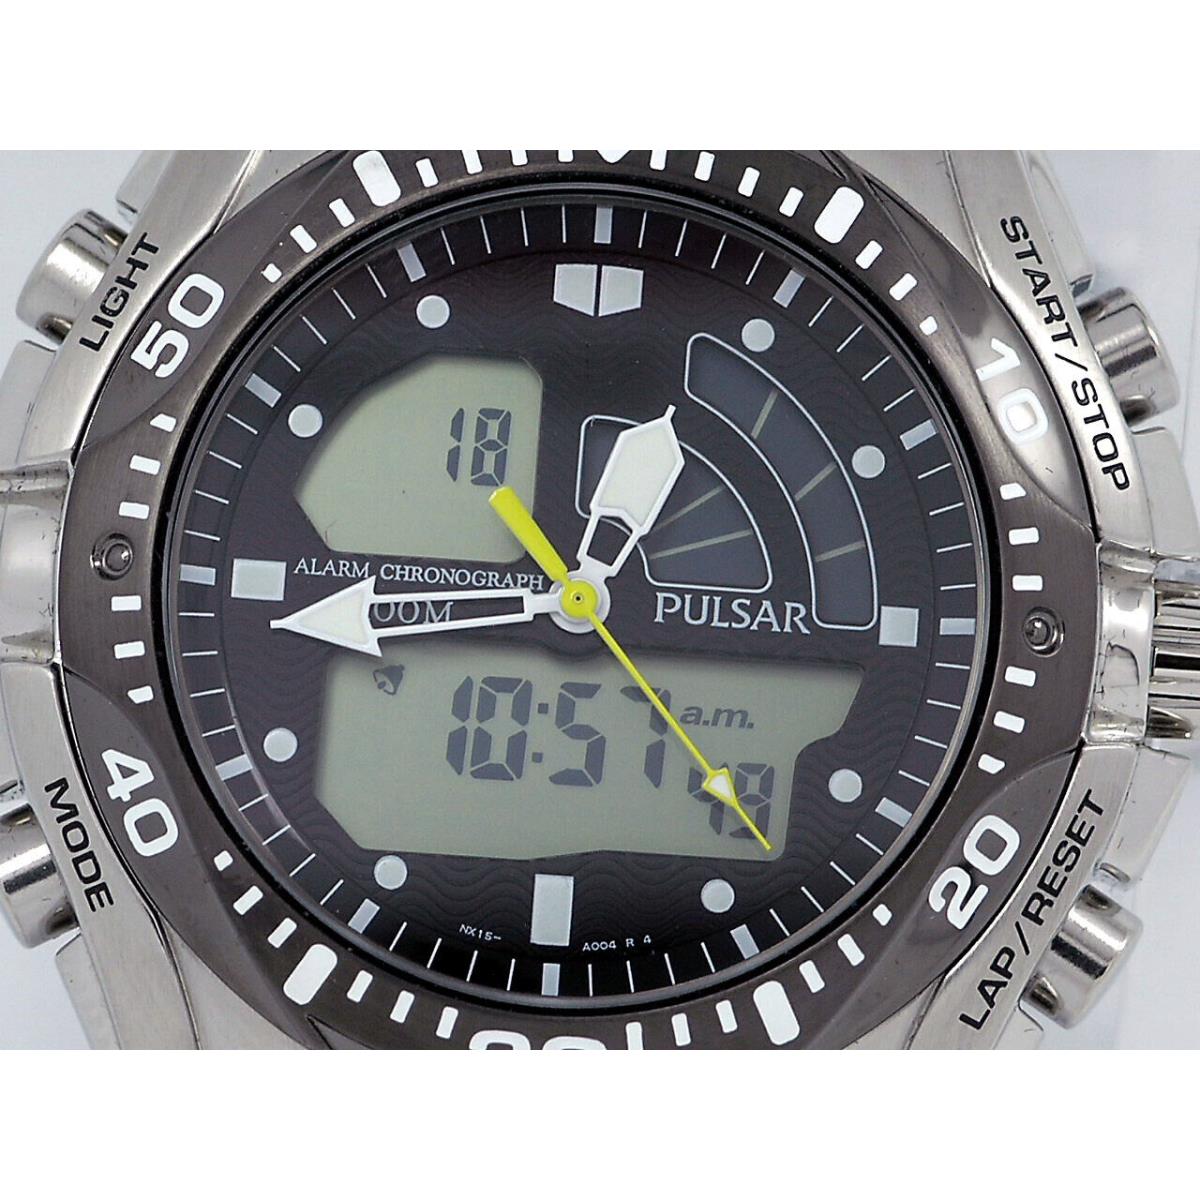 Seiko Pulsar PP4007 Tech Gear Alarm Chronograph Sport Watch Steel Black